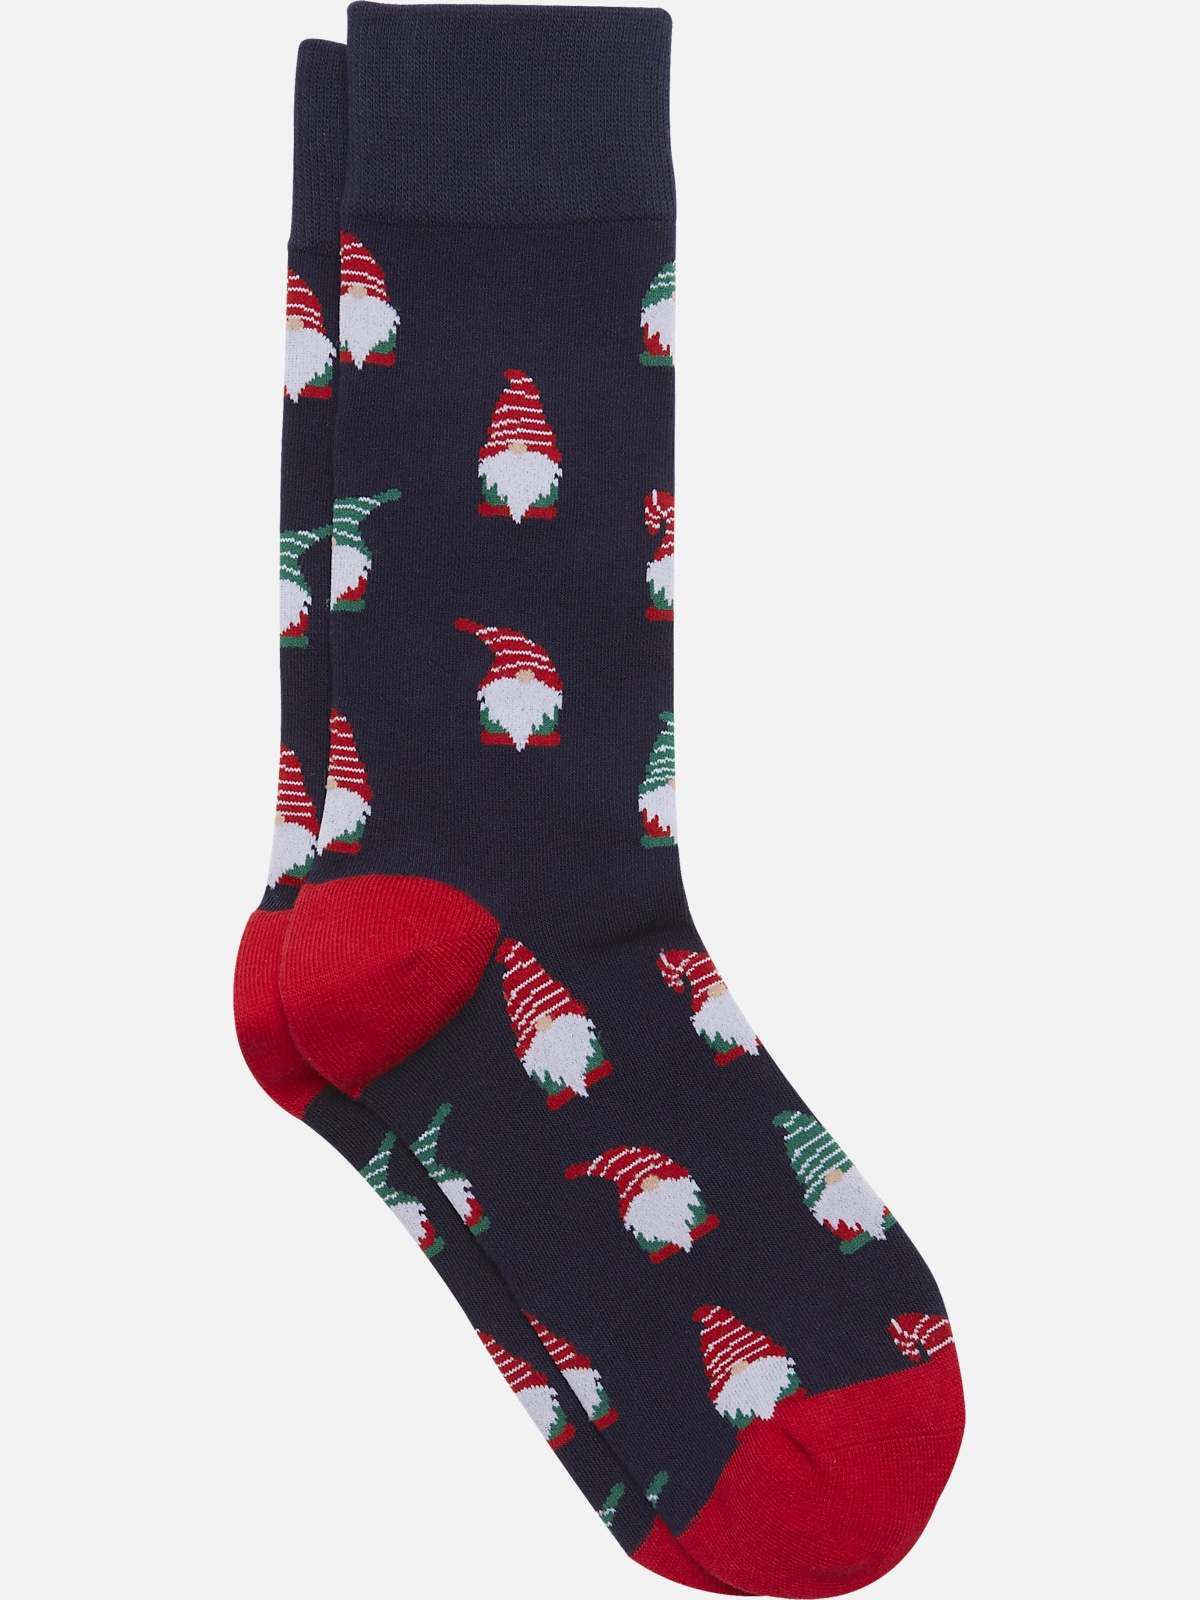 Egara Gnome Socks | All Clearance $39.99| Men's Wearhouse